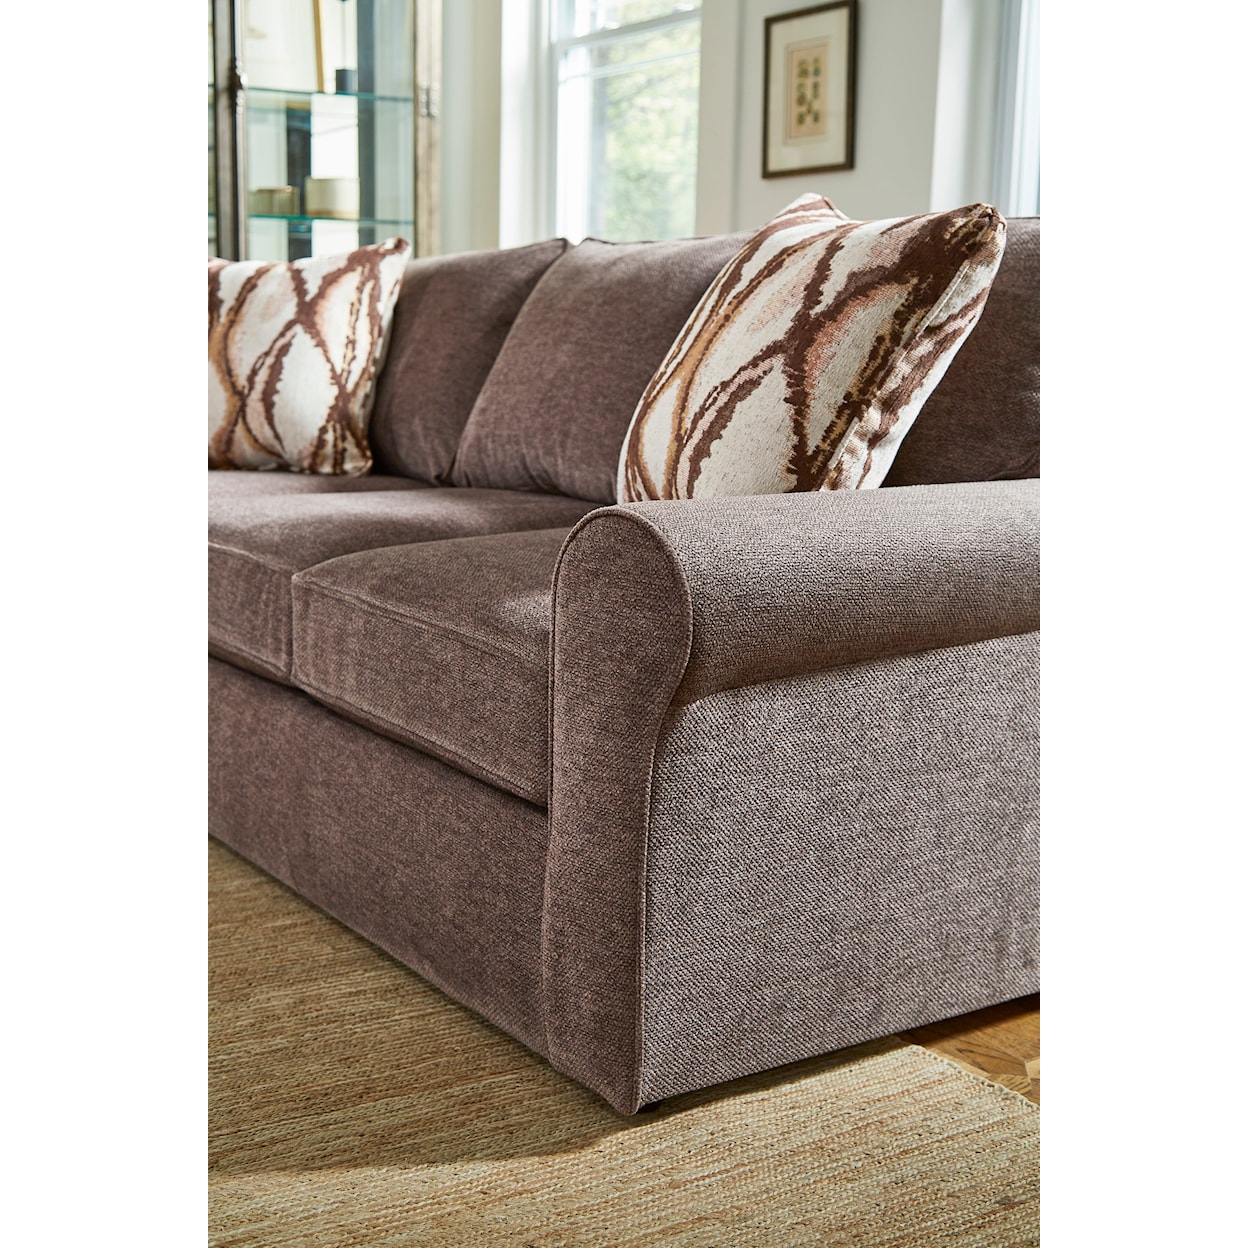 Bravo Furniture Hanway Queen Sleeper Sofa w/ Innerspring Mattress